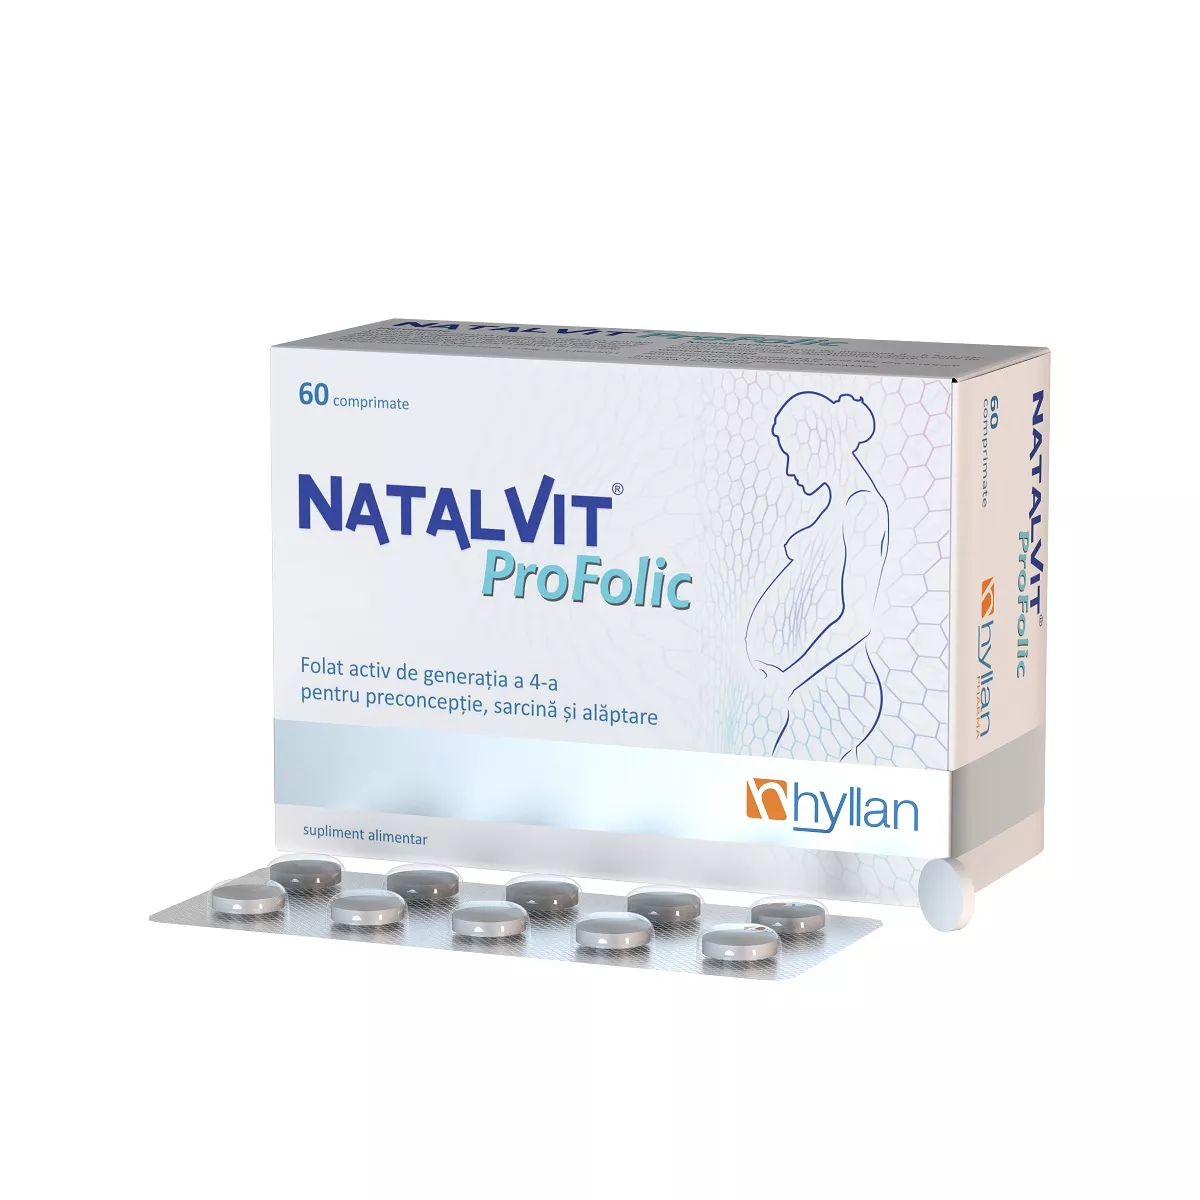 Natalvit Profolic, 60 comprimate, Hyllan , [],nordpharm.ro